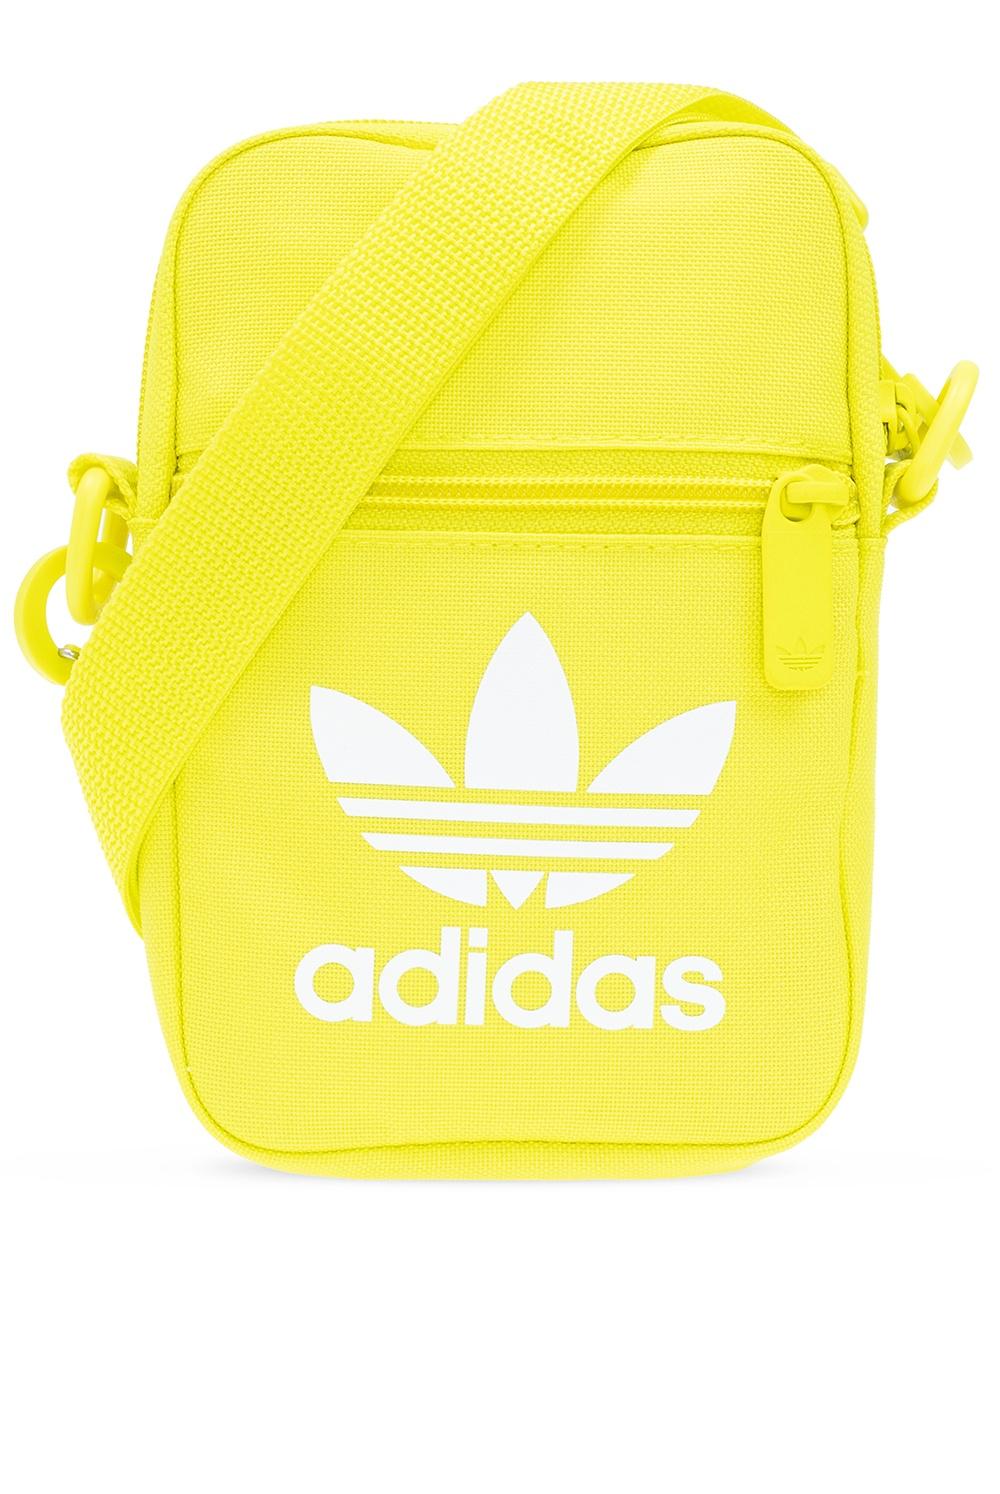 adidas Originals Shoulder Bag With Logo Yellow - Lyst